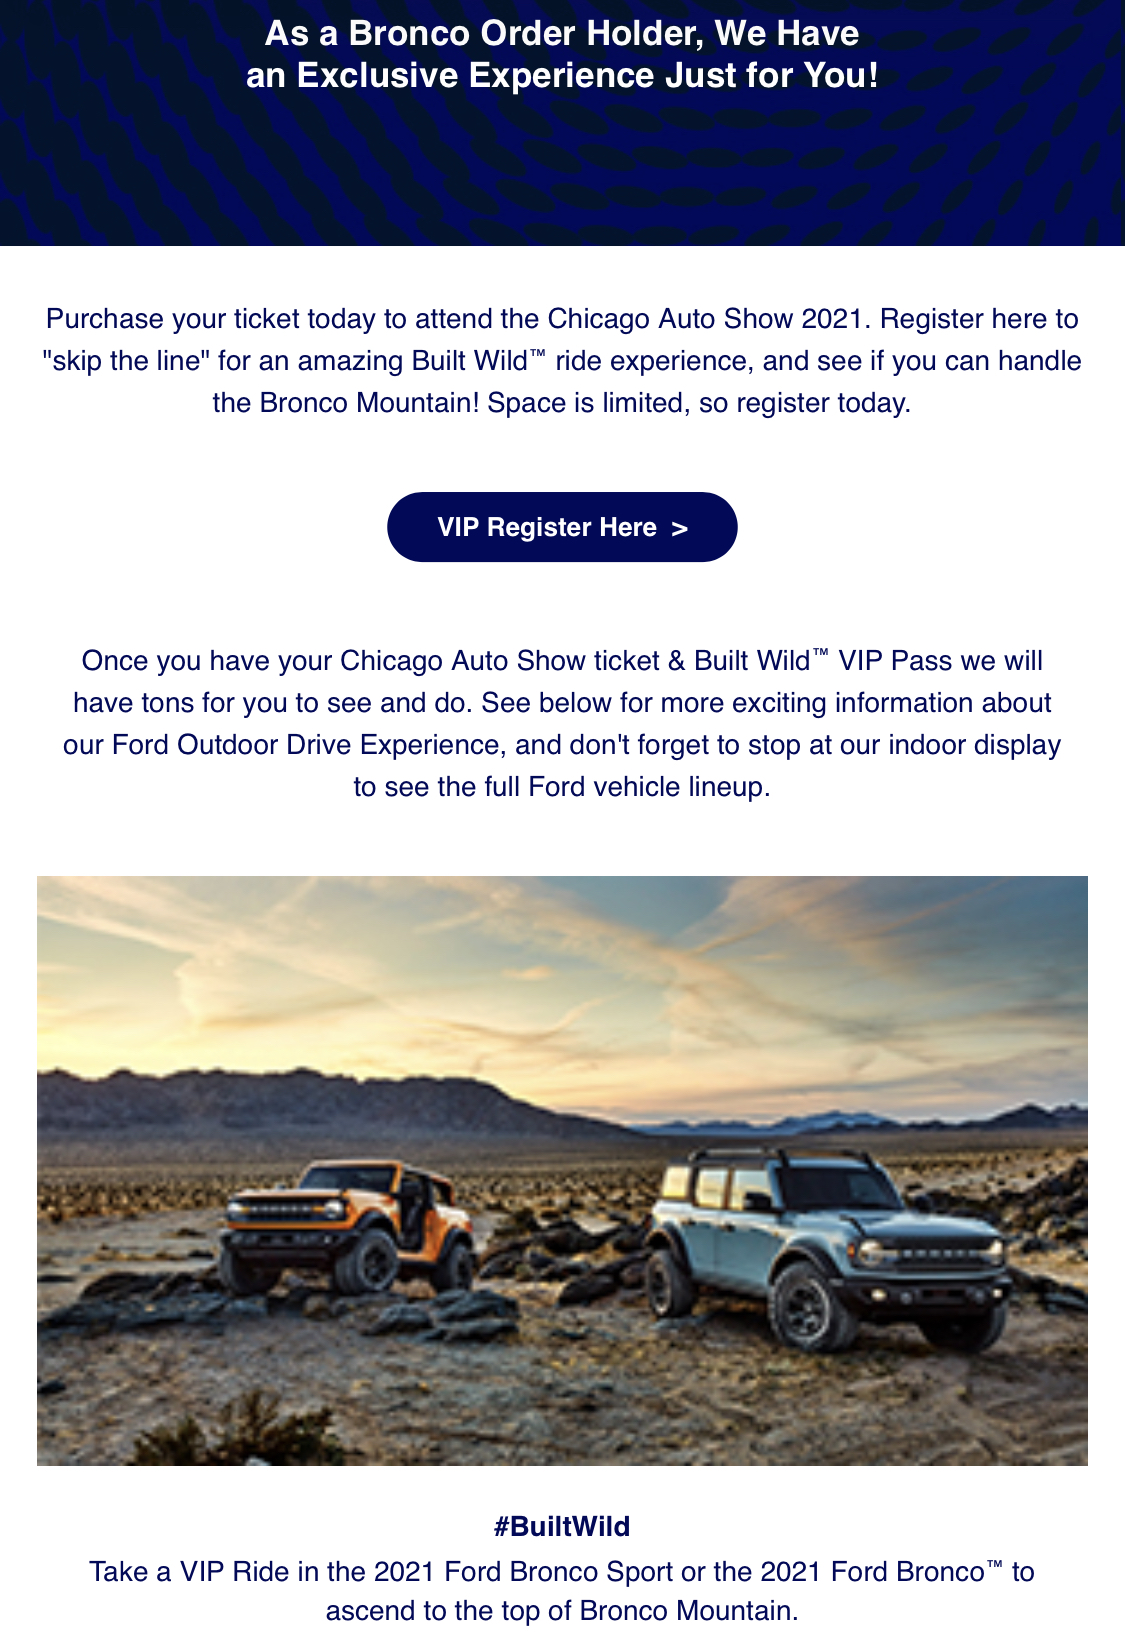 Ford Bronco Ford Bronco Order Holder Email - Chicago Auto Show VIP F3CAD4DA-F1AE-4B49-9473-29AF2D7DB6A4